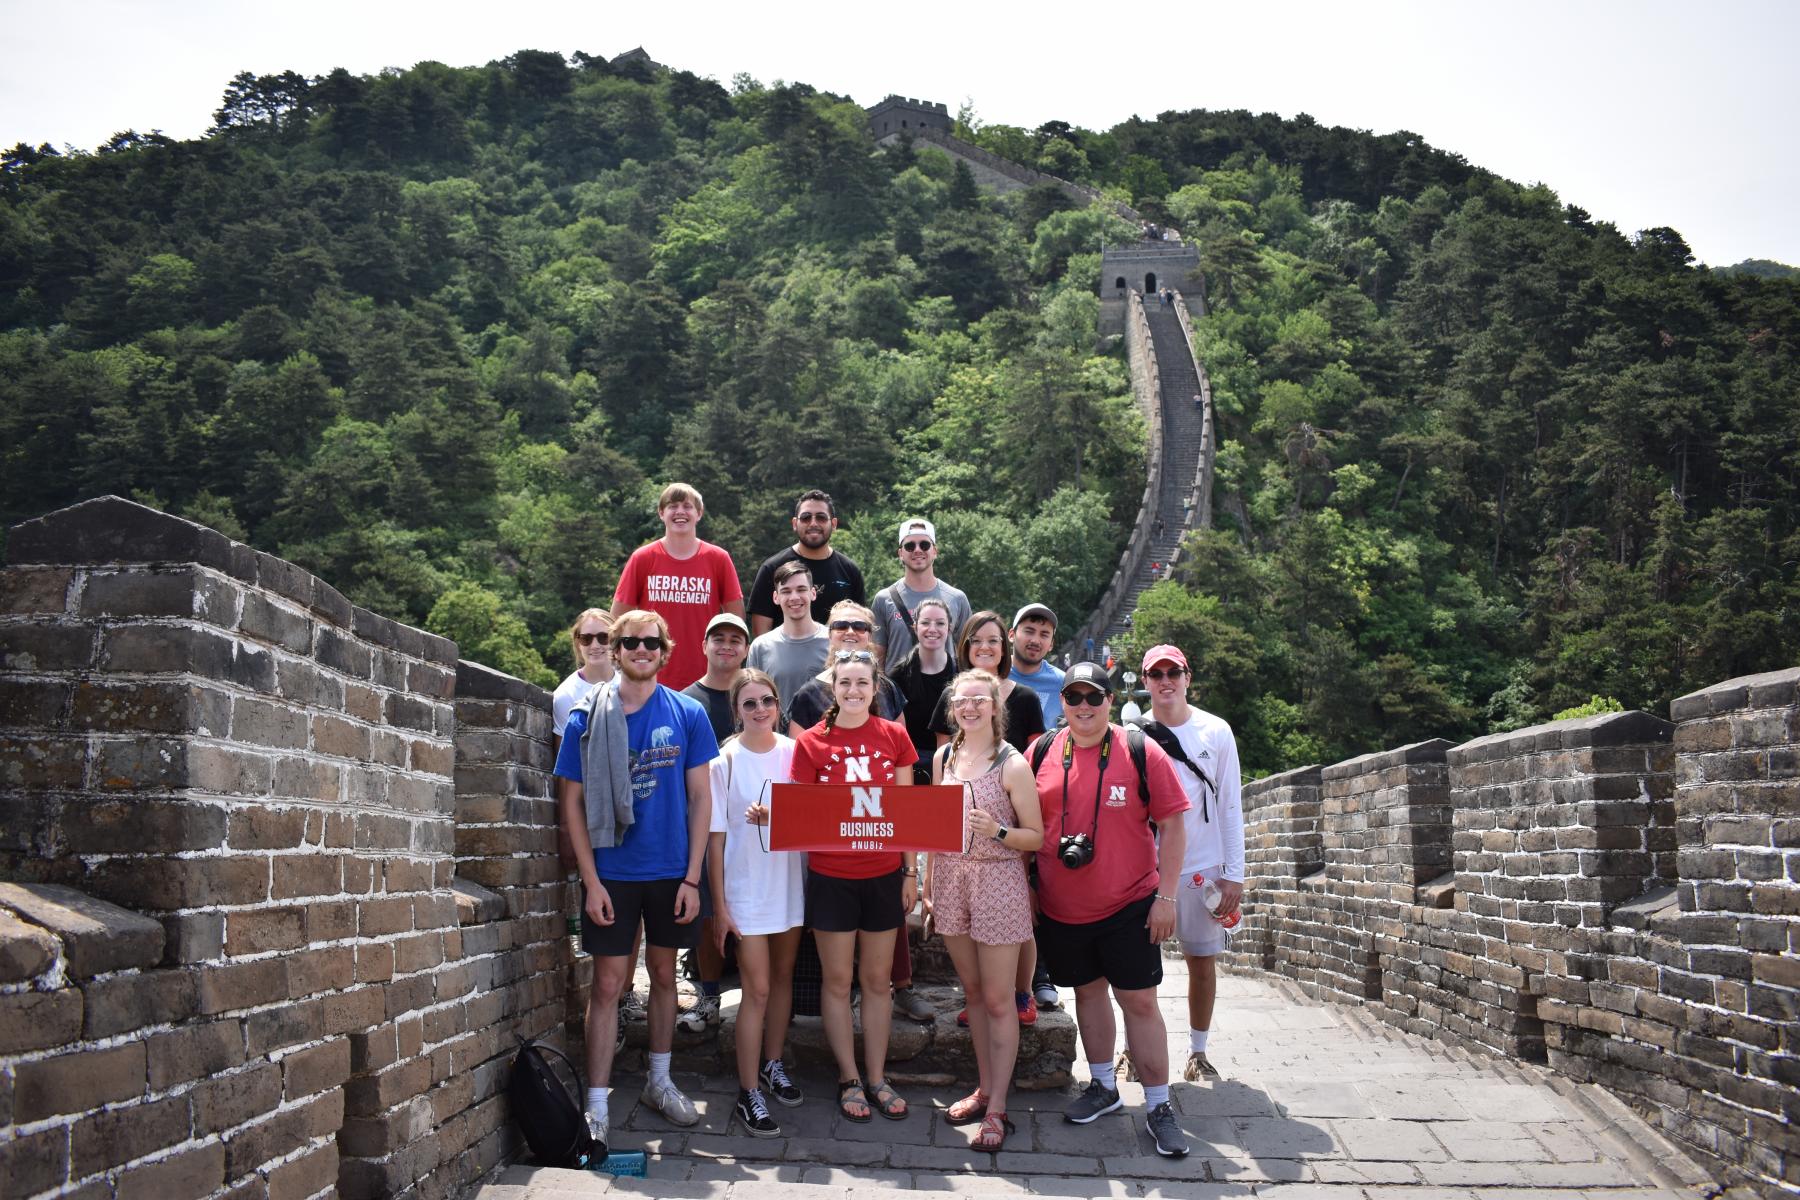 Students smiling at the Great Wall of China.